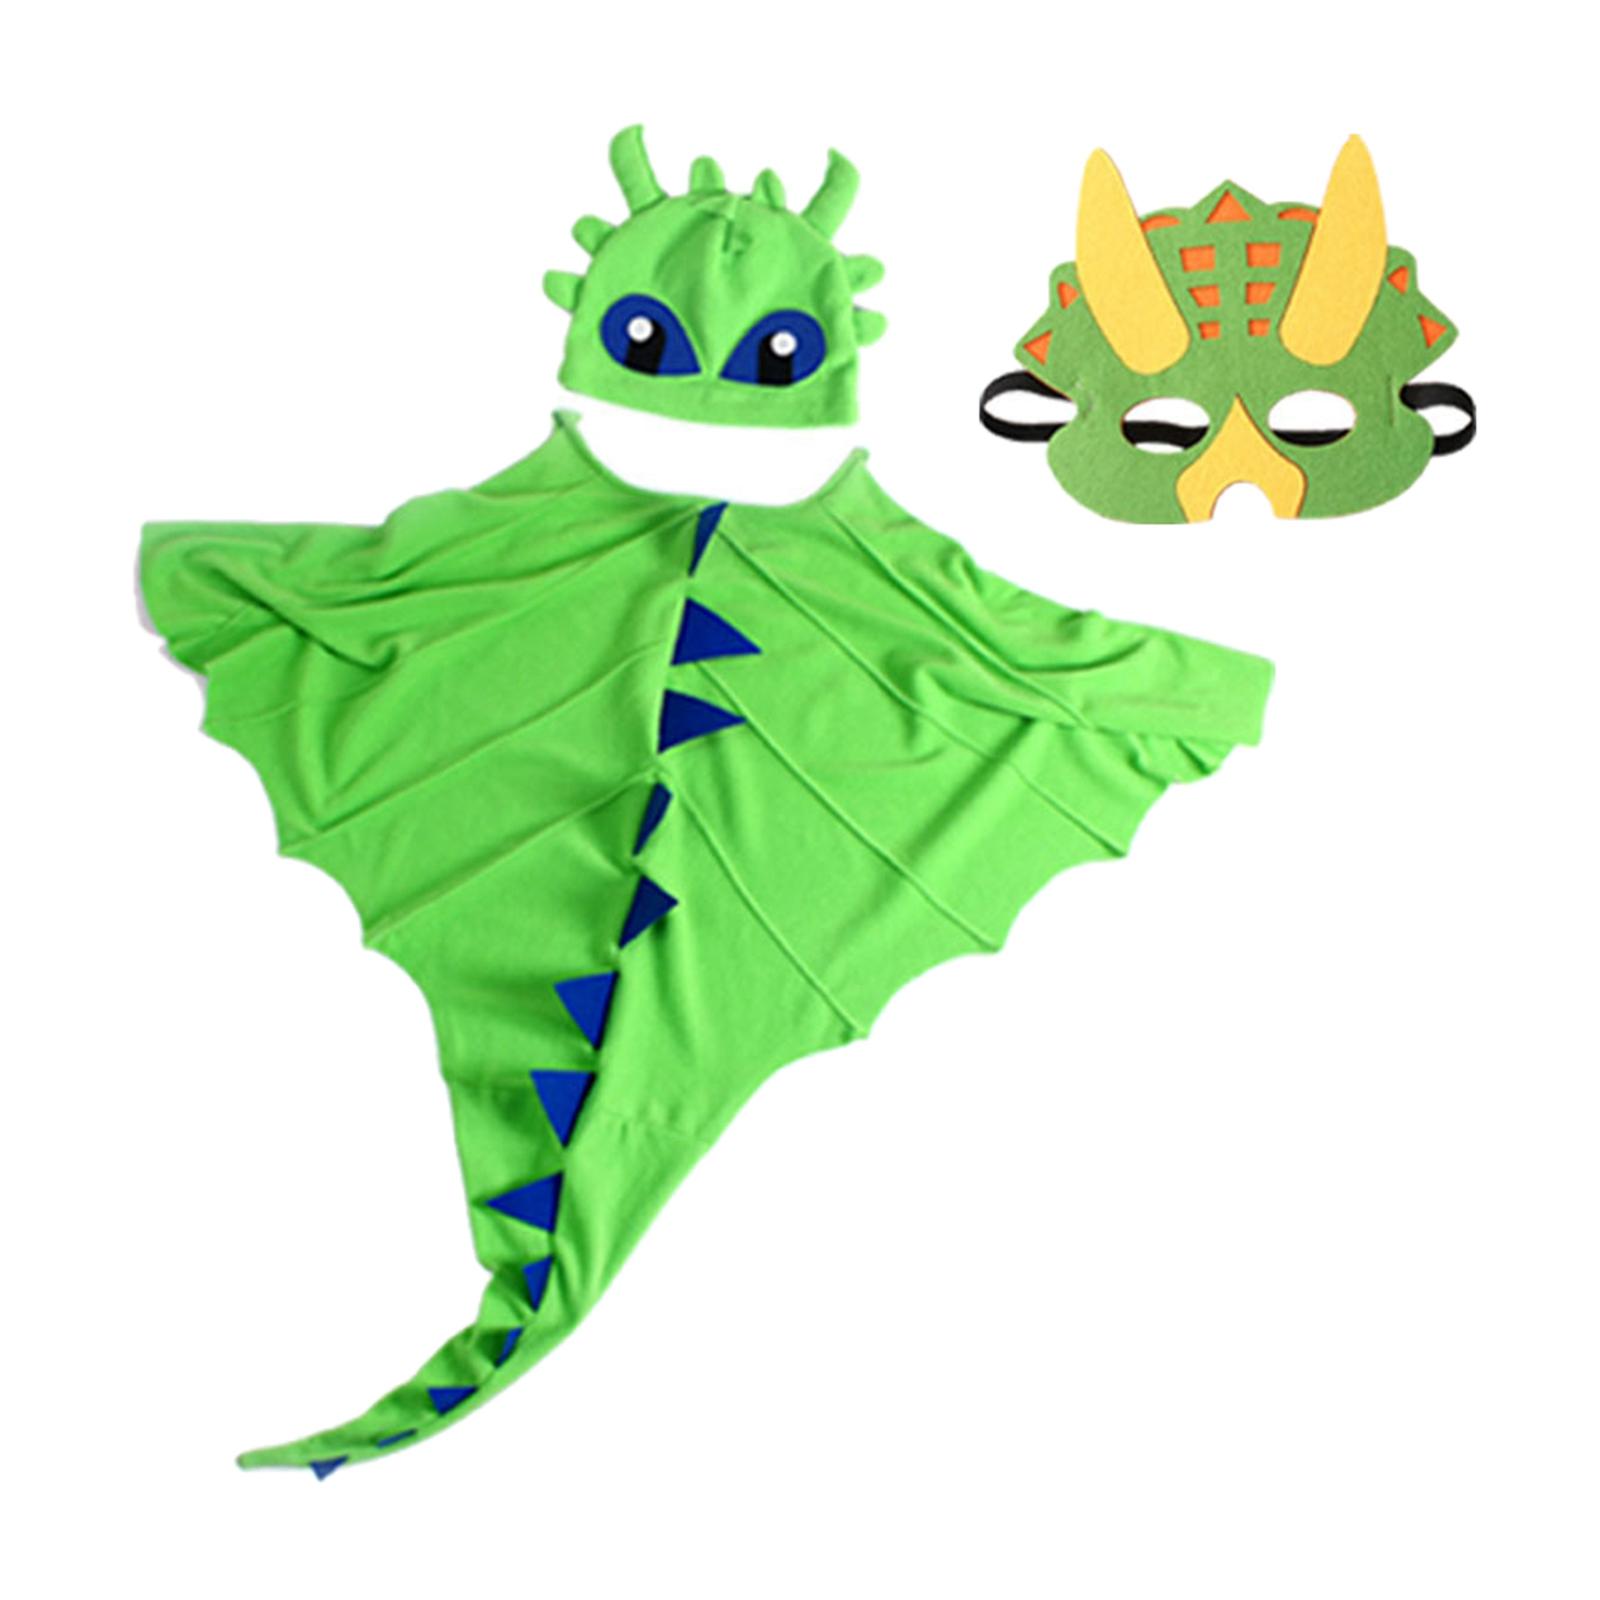 Toothless Dragon Costume Dinosaur Cape Child Costume Dragon Dress Up Girls Boys Toys Halloween for Birthday - Toothless Plush